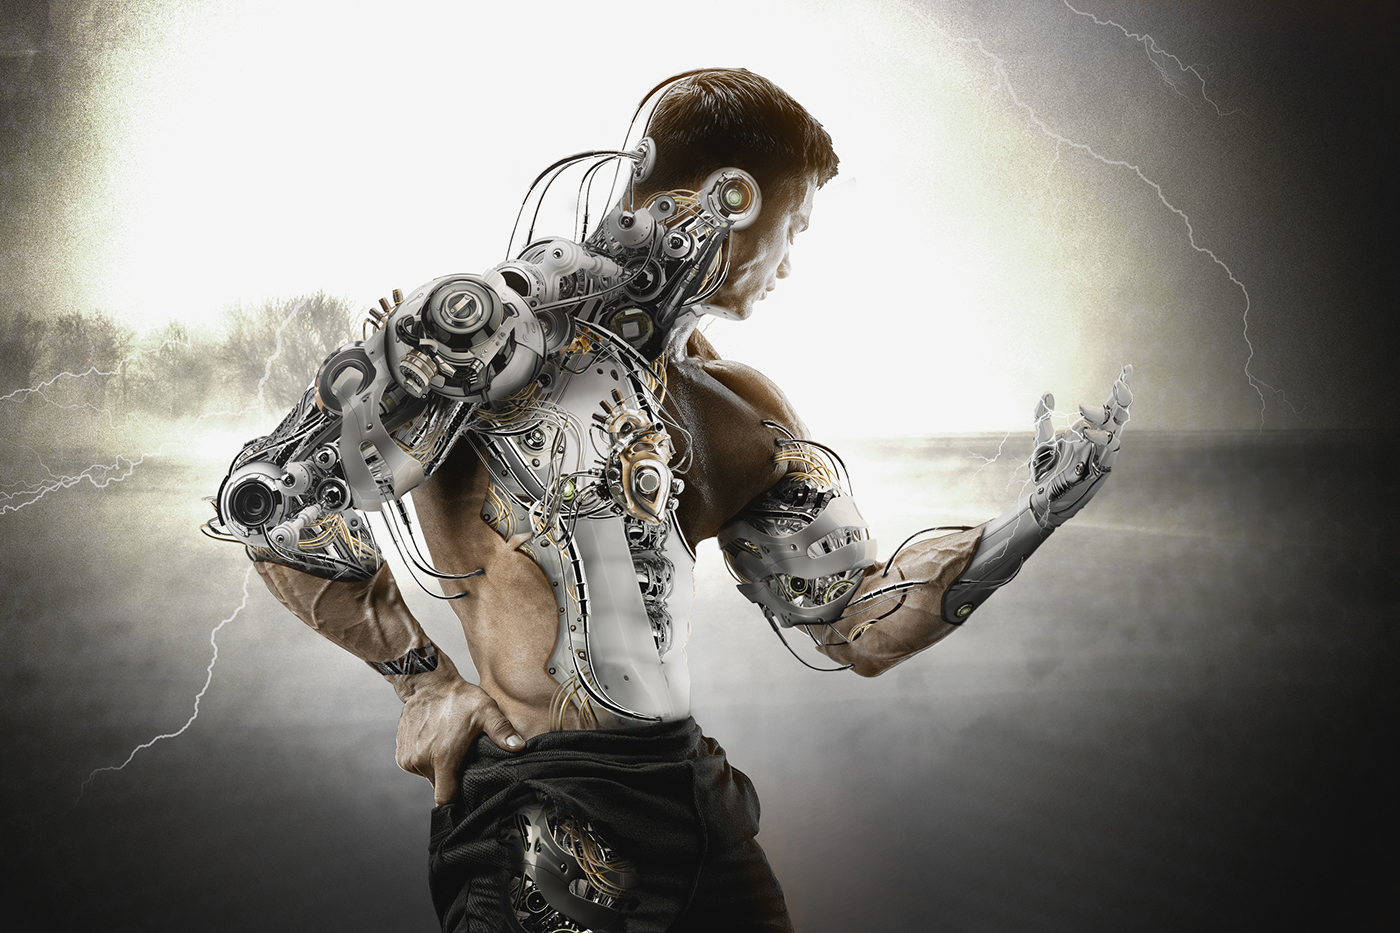 Cyborg,model,metal,art,compositing,lightning,creative,Adobe Photoshop,Art D...